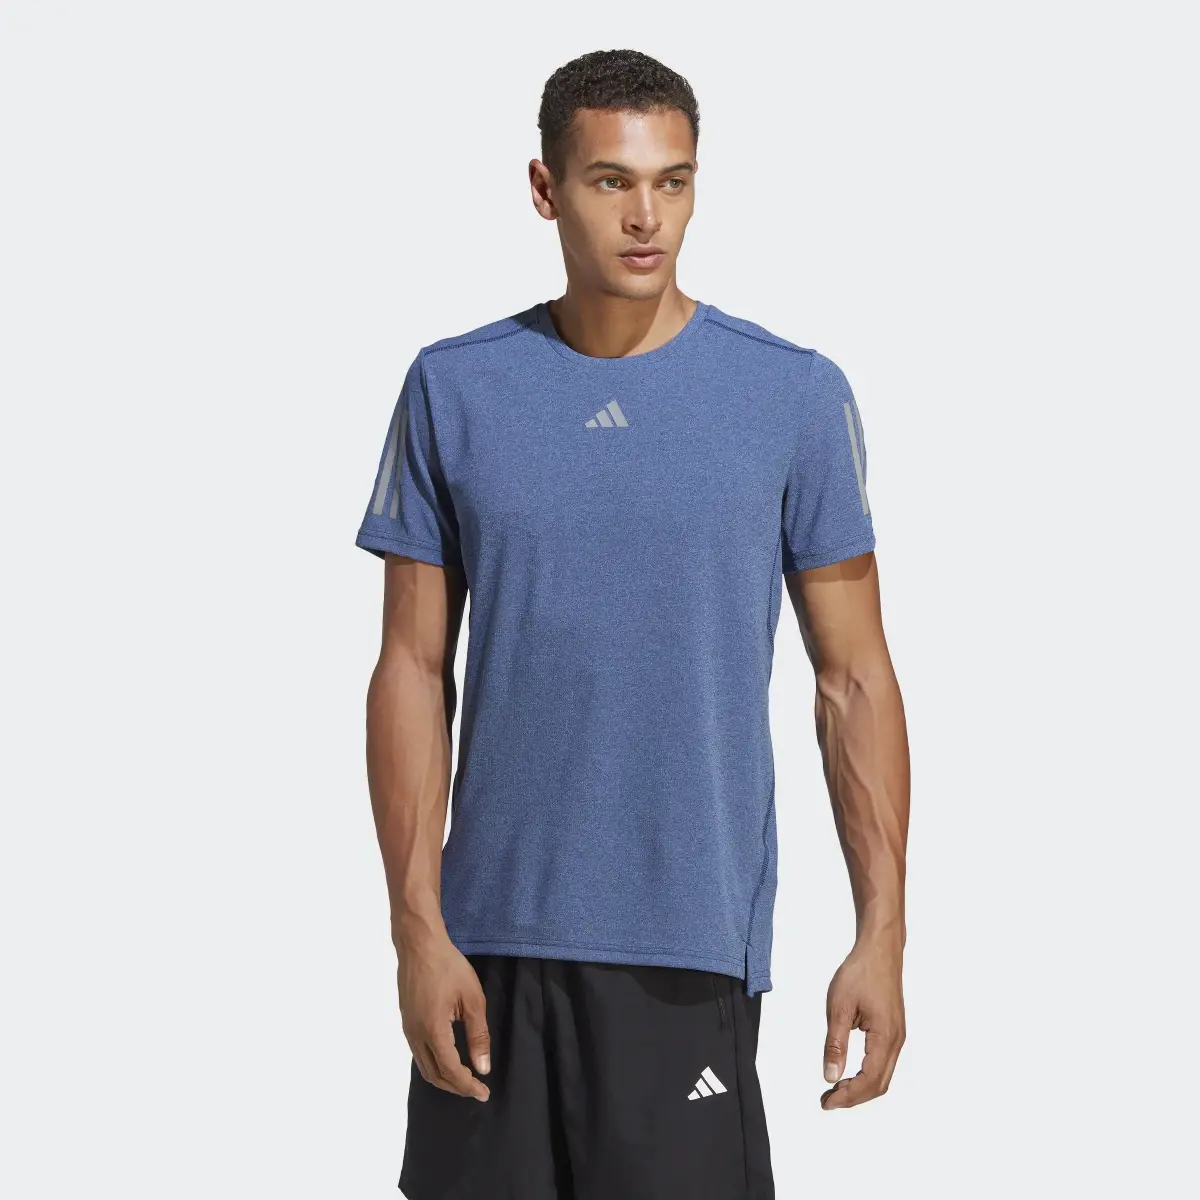 Adidas Own the Run Heather T-Shirt. 2